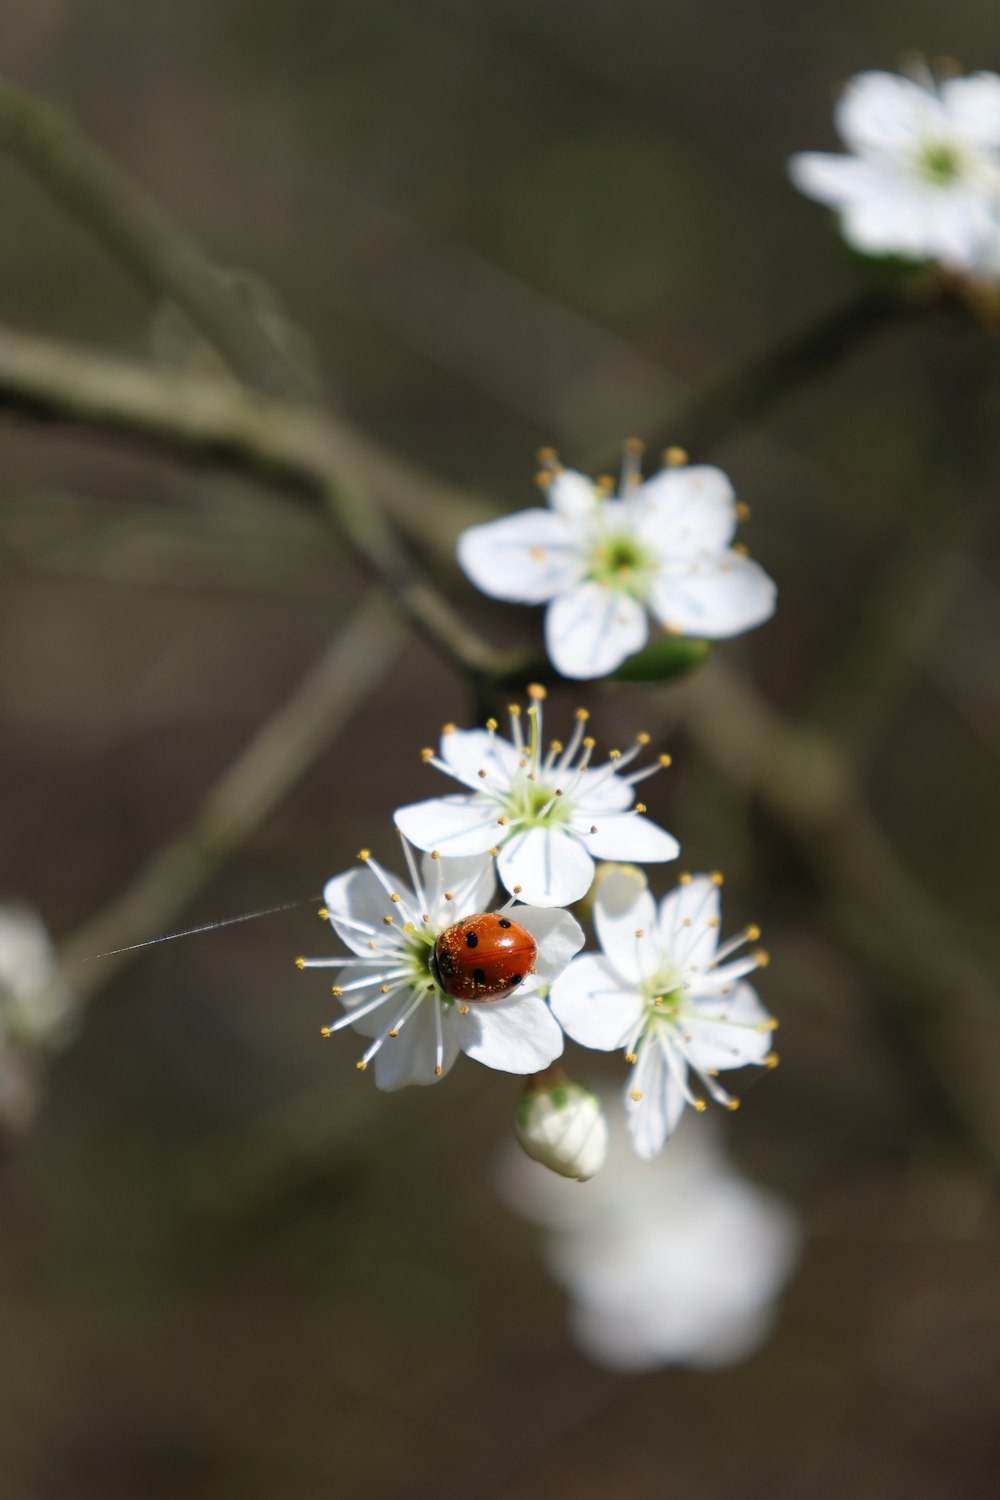 a ladybug sitting on a white flower